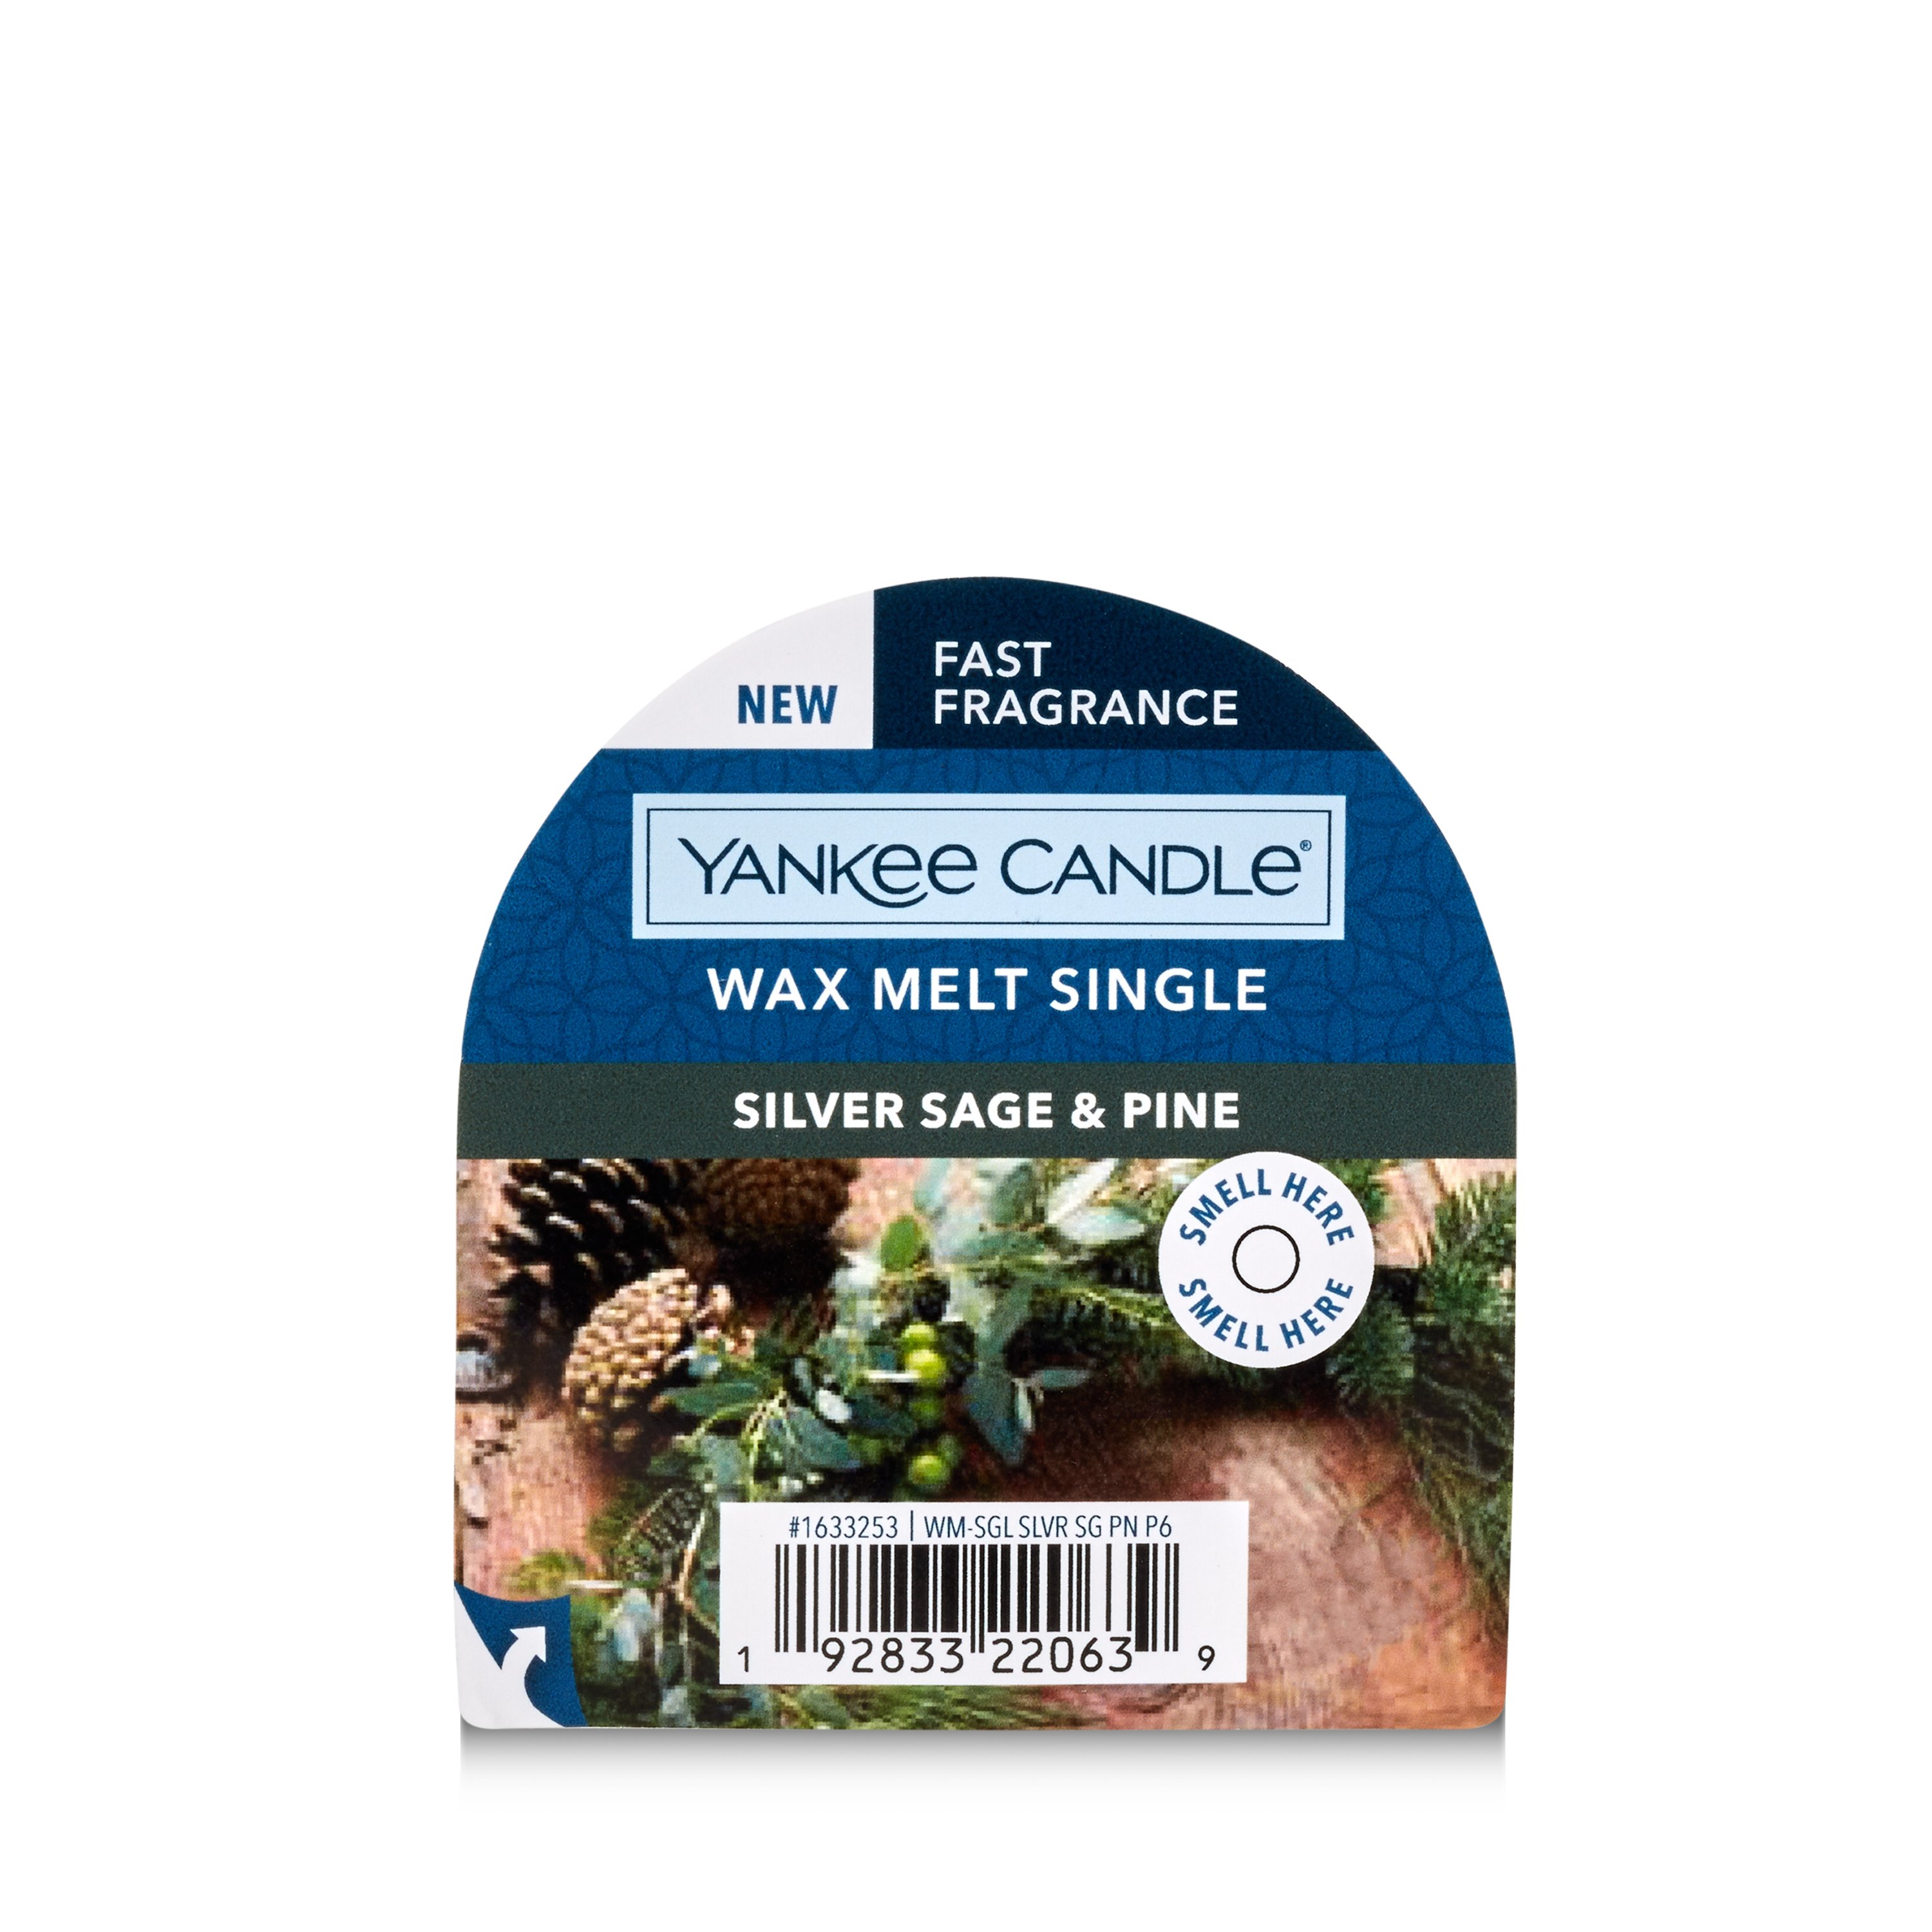 Mountain Pine Wax Melts – Pedigree Candle Co.